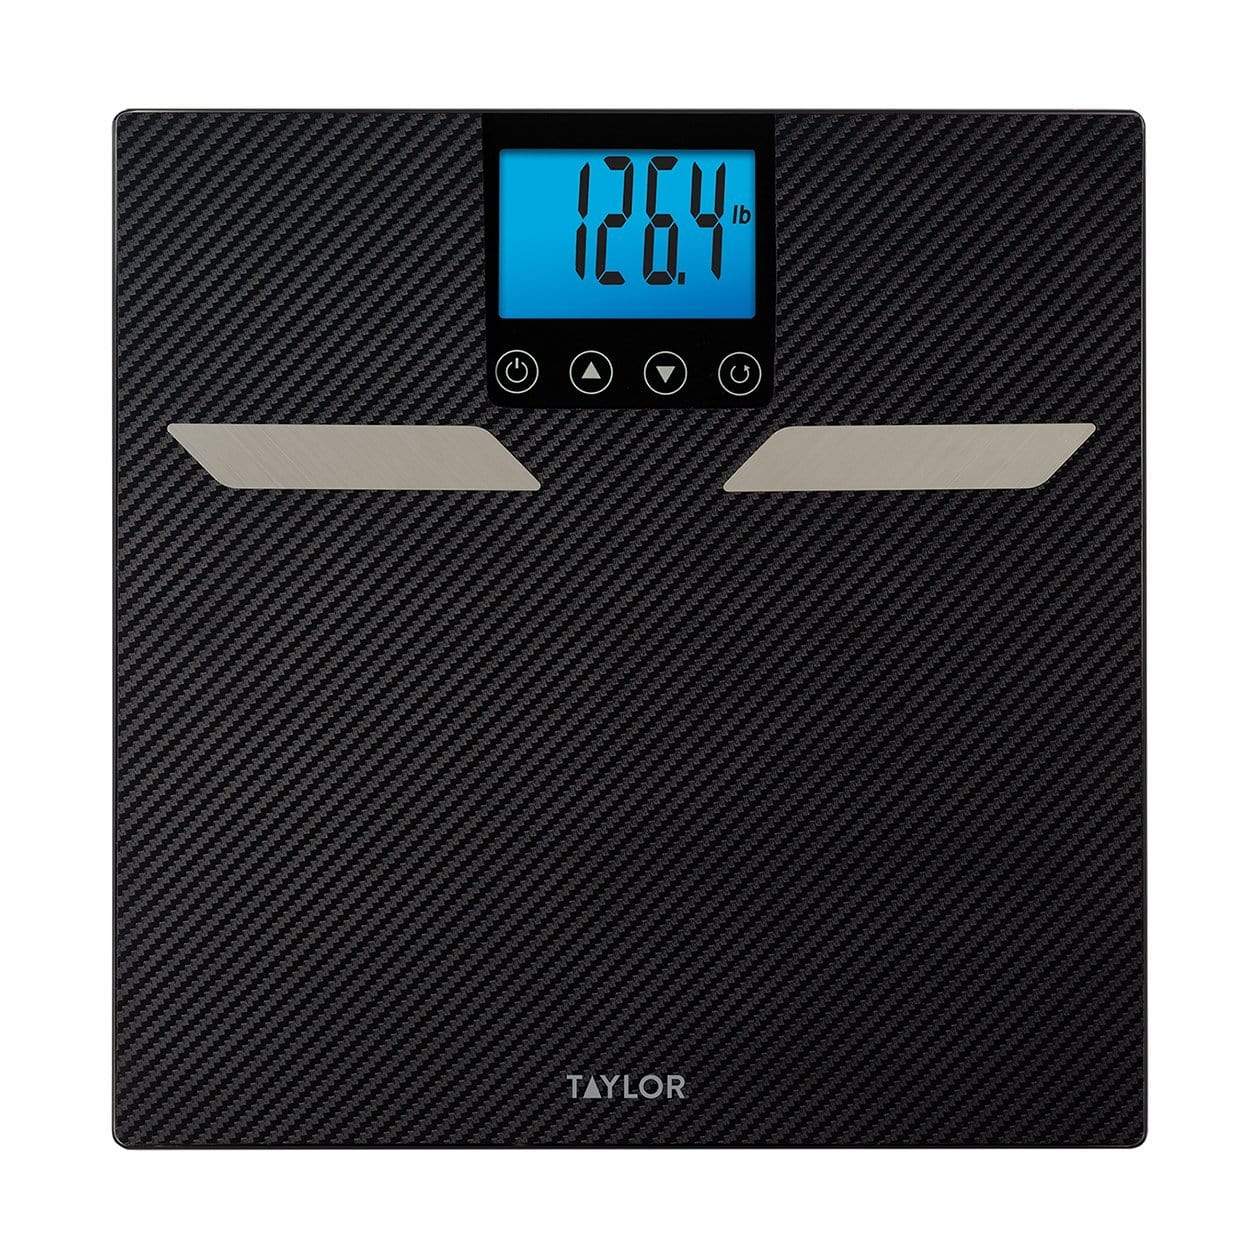 Taylor Precision Products Digital Body Fat Analyzer Scale 5736F